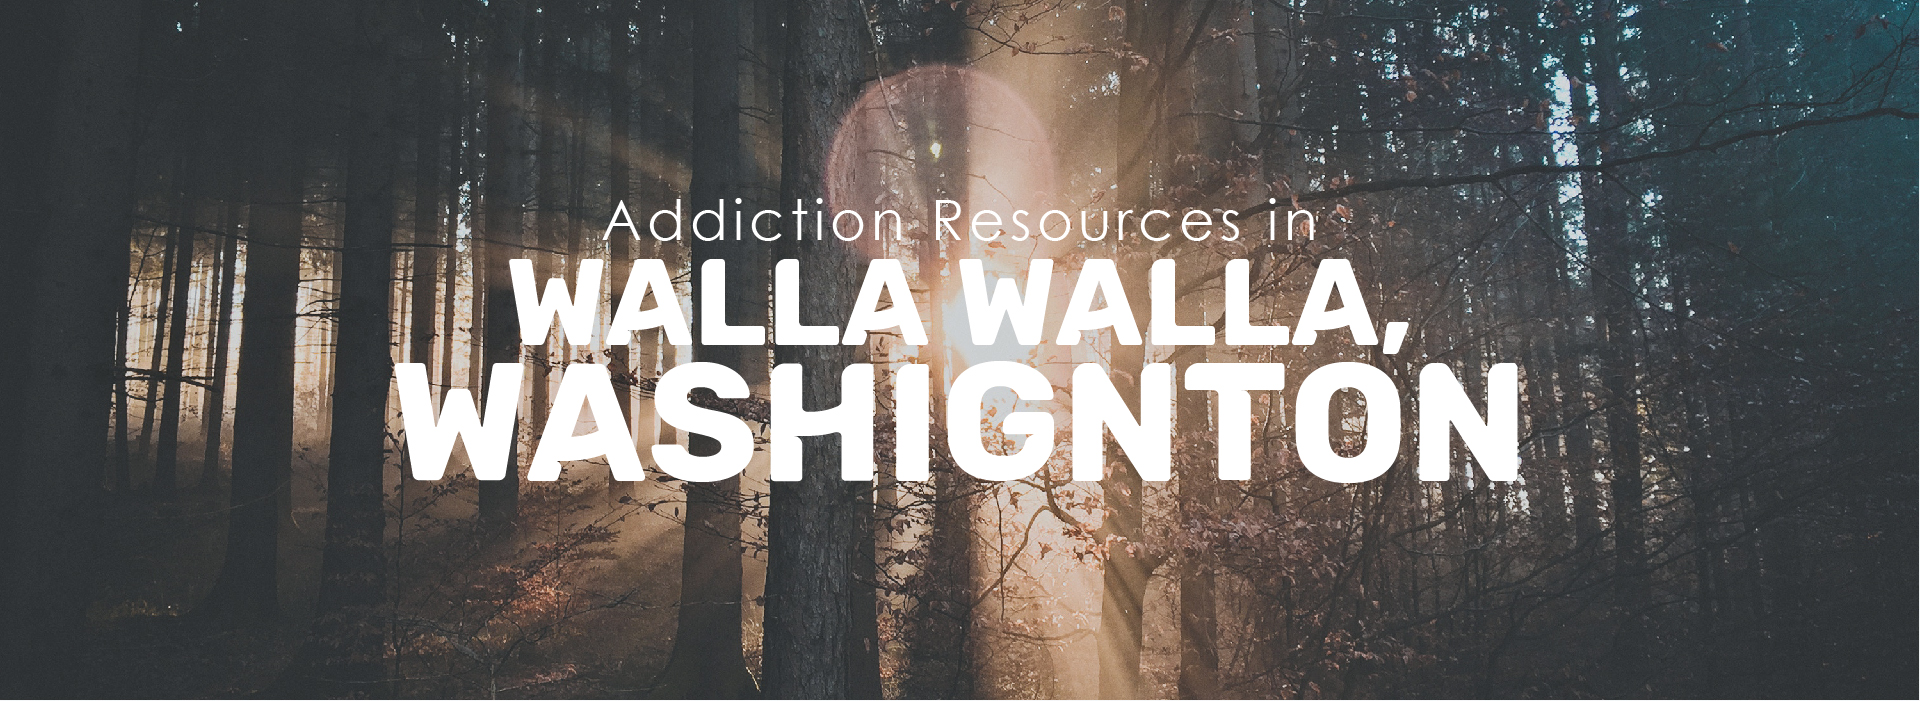 Addiction resources in Walla Walla, Washington